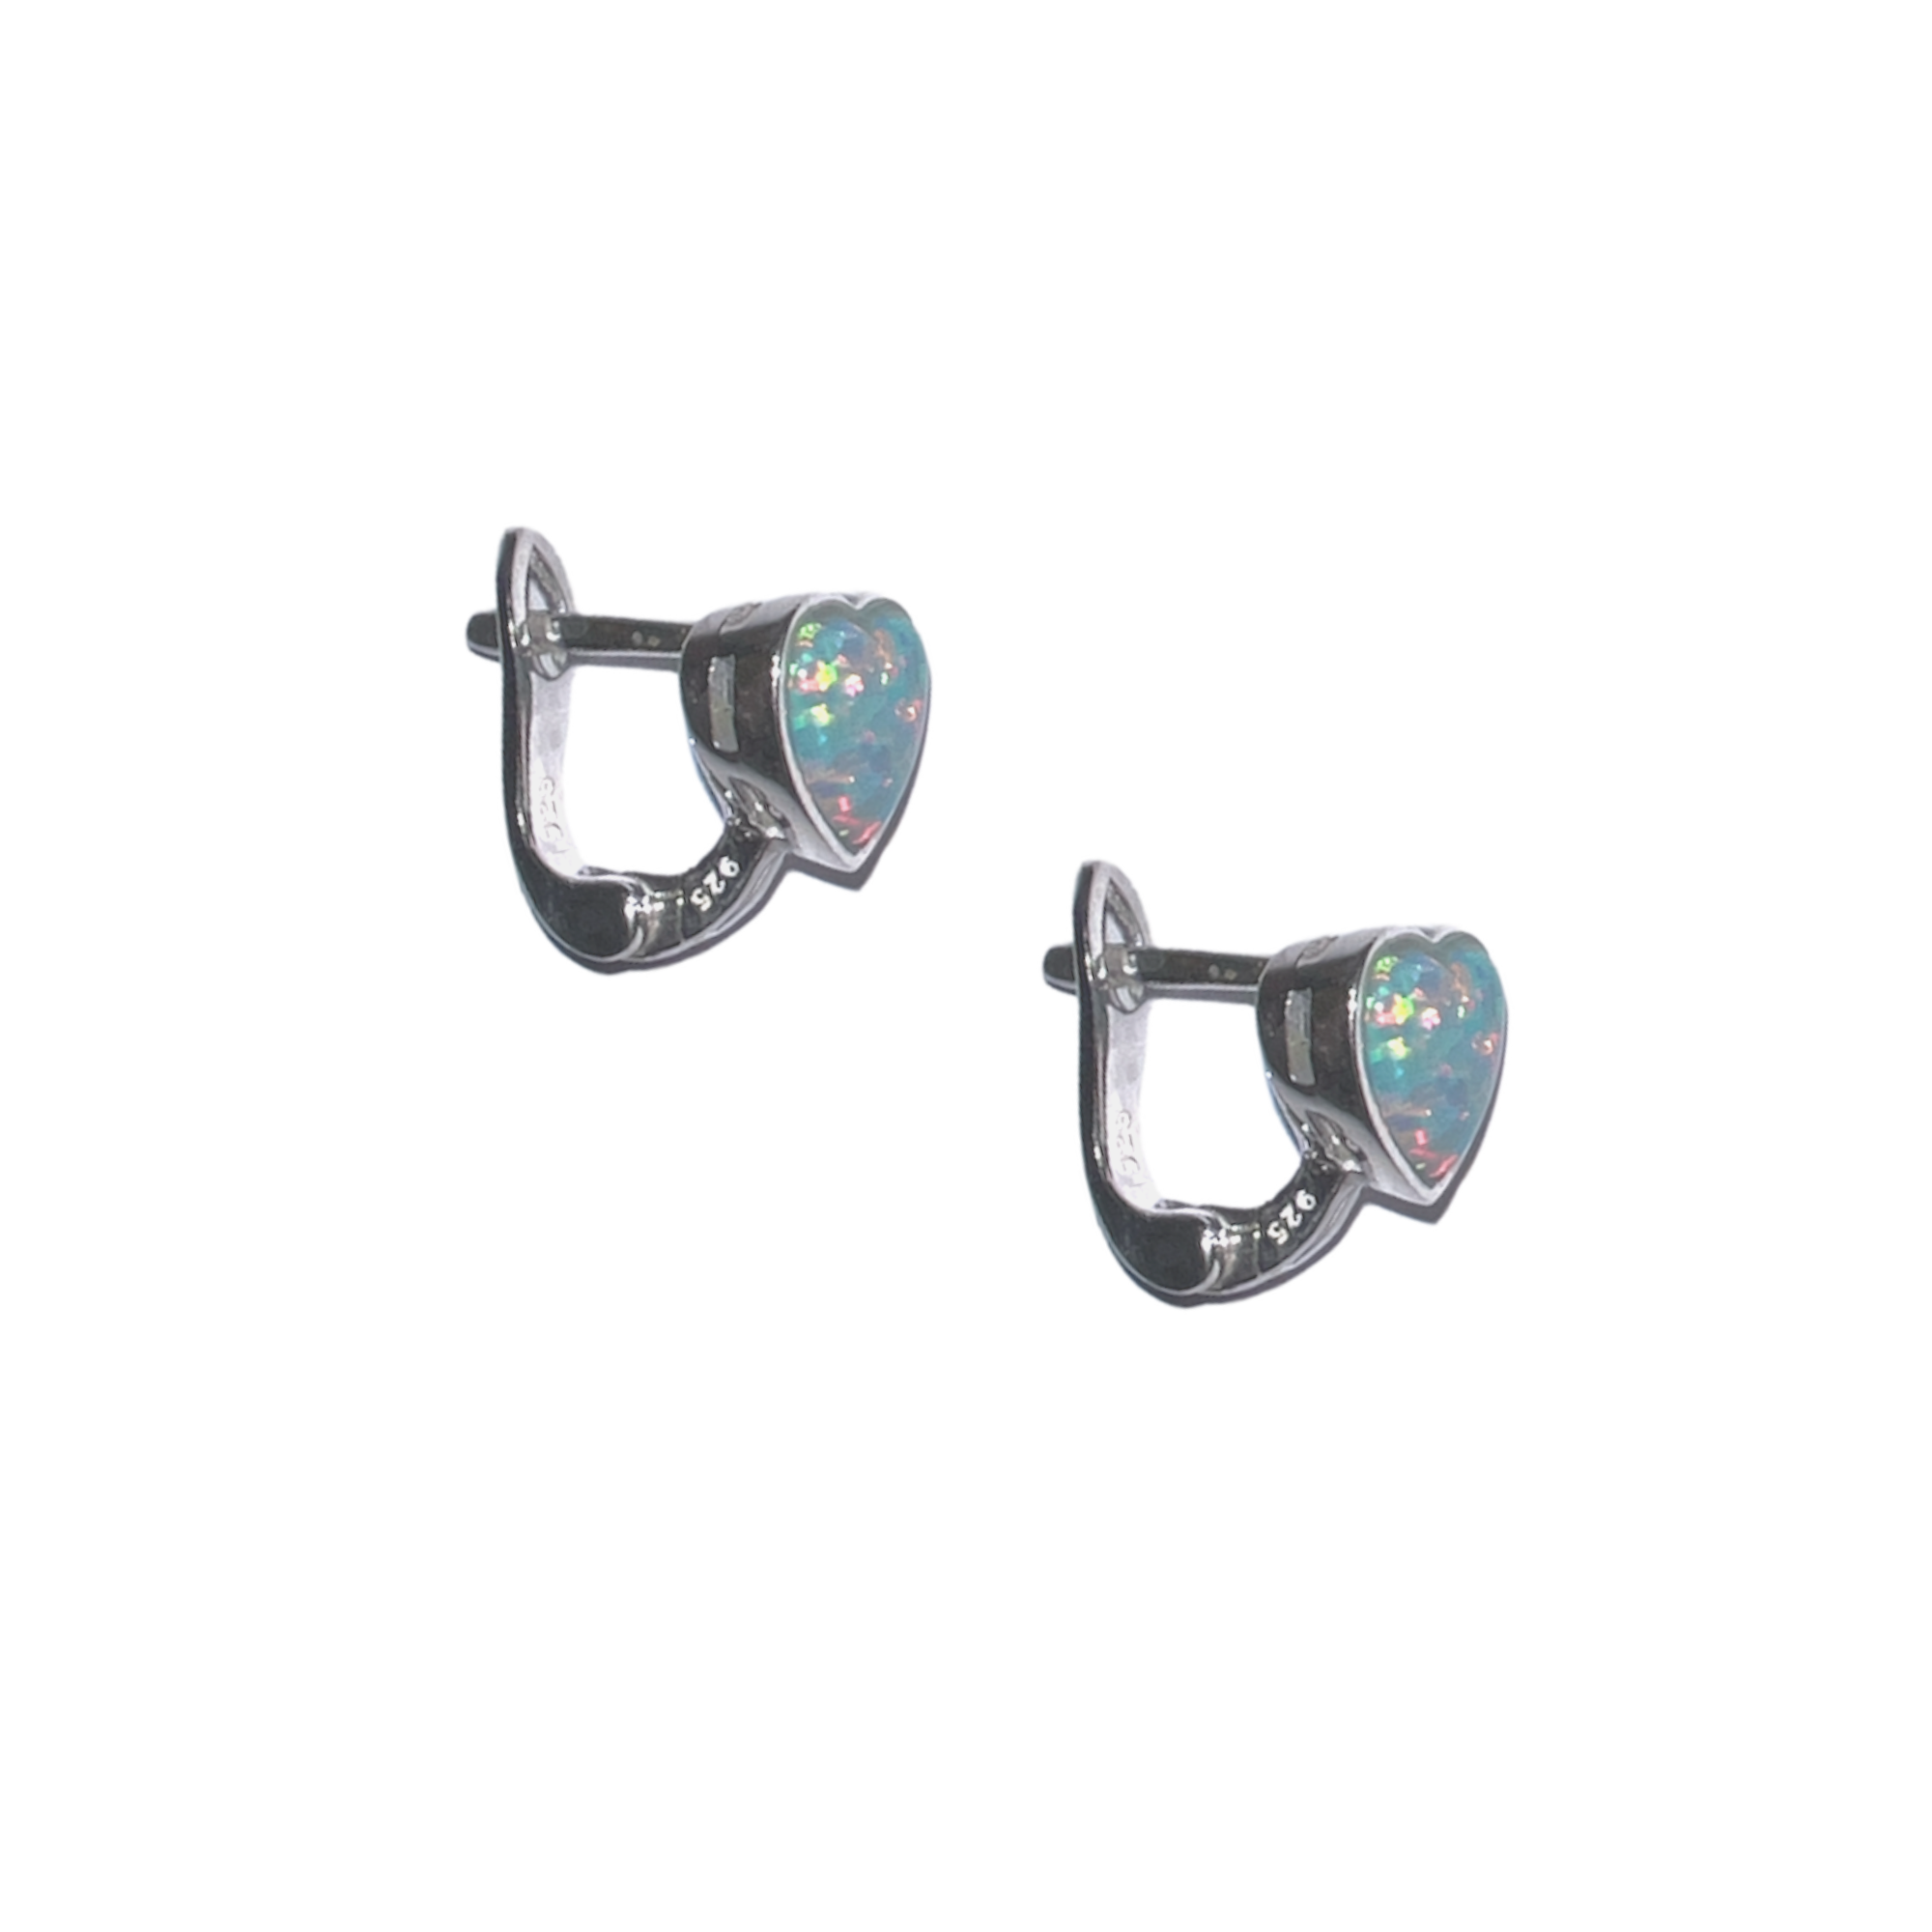 High Quality Japanese Opal Sterling Silver Heart Earrings